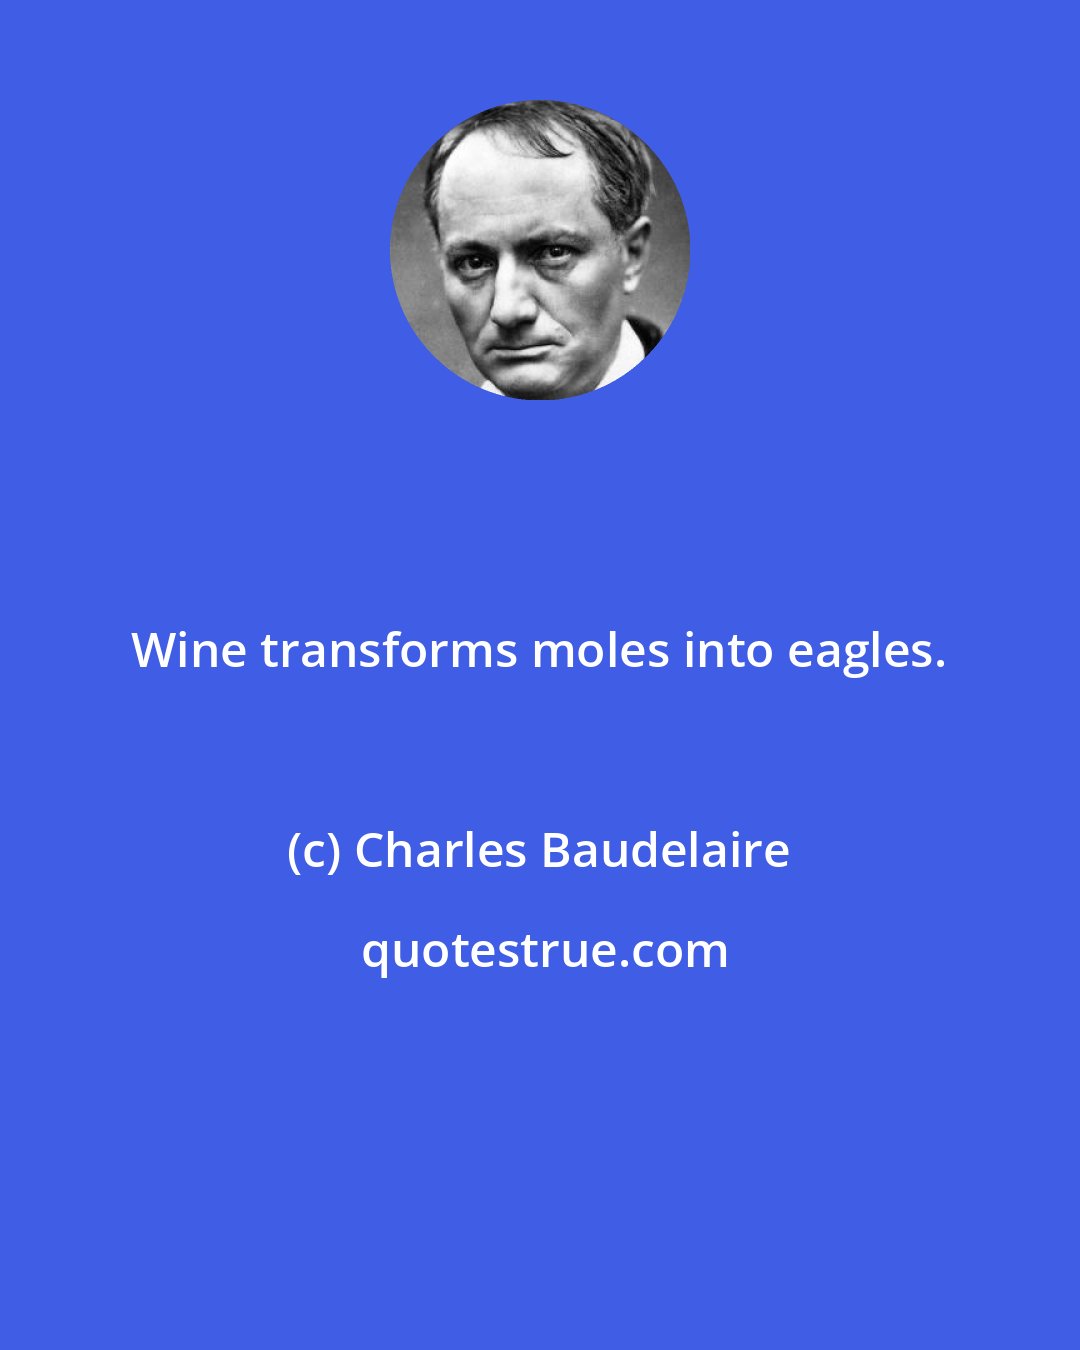 Charles Baudelaire: Wine transforms moles into eagles.